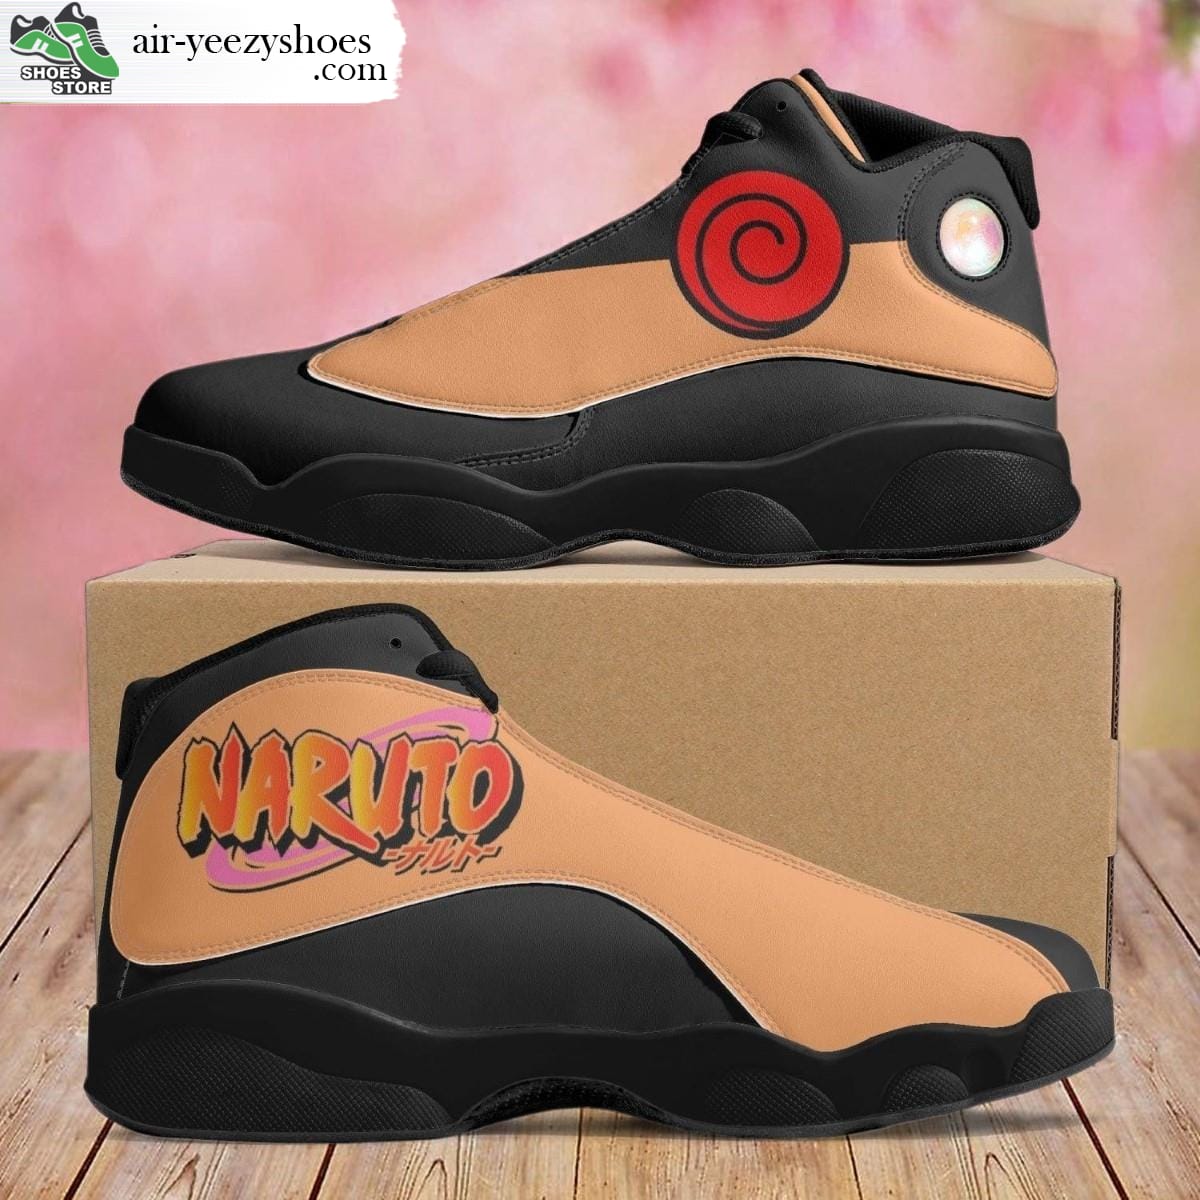 Naruto Jordan 13 Shoes, Naruto Anime Gift